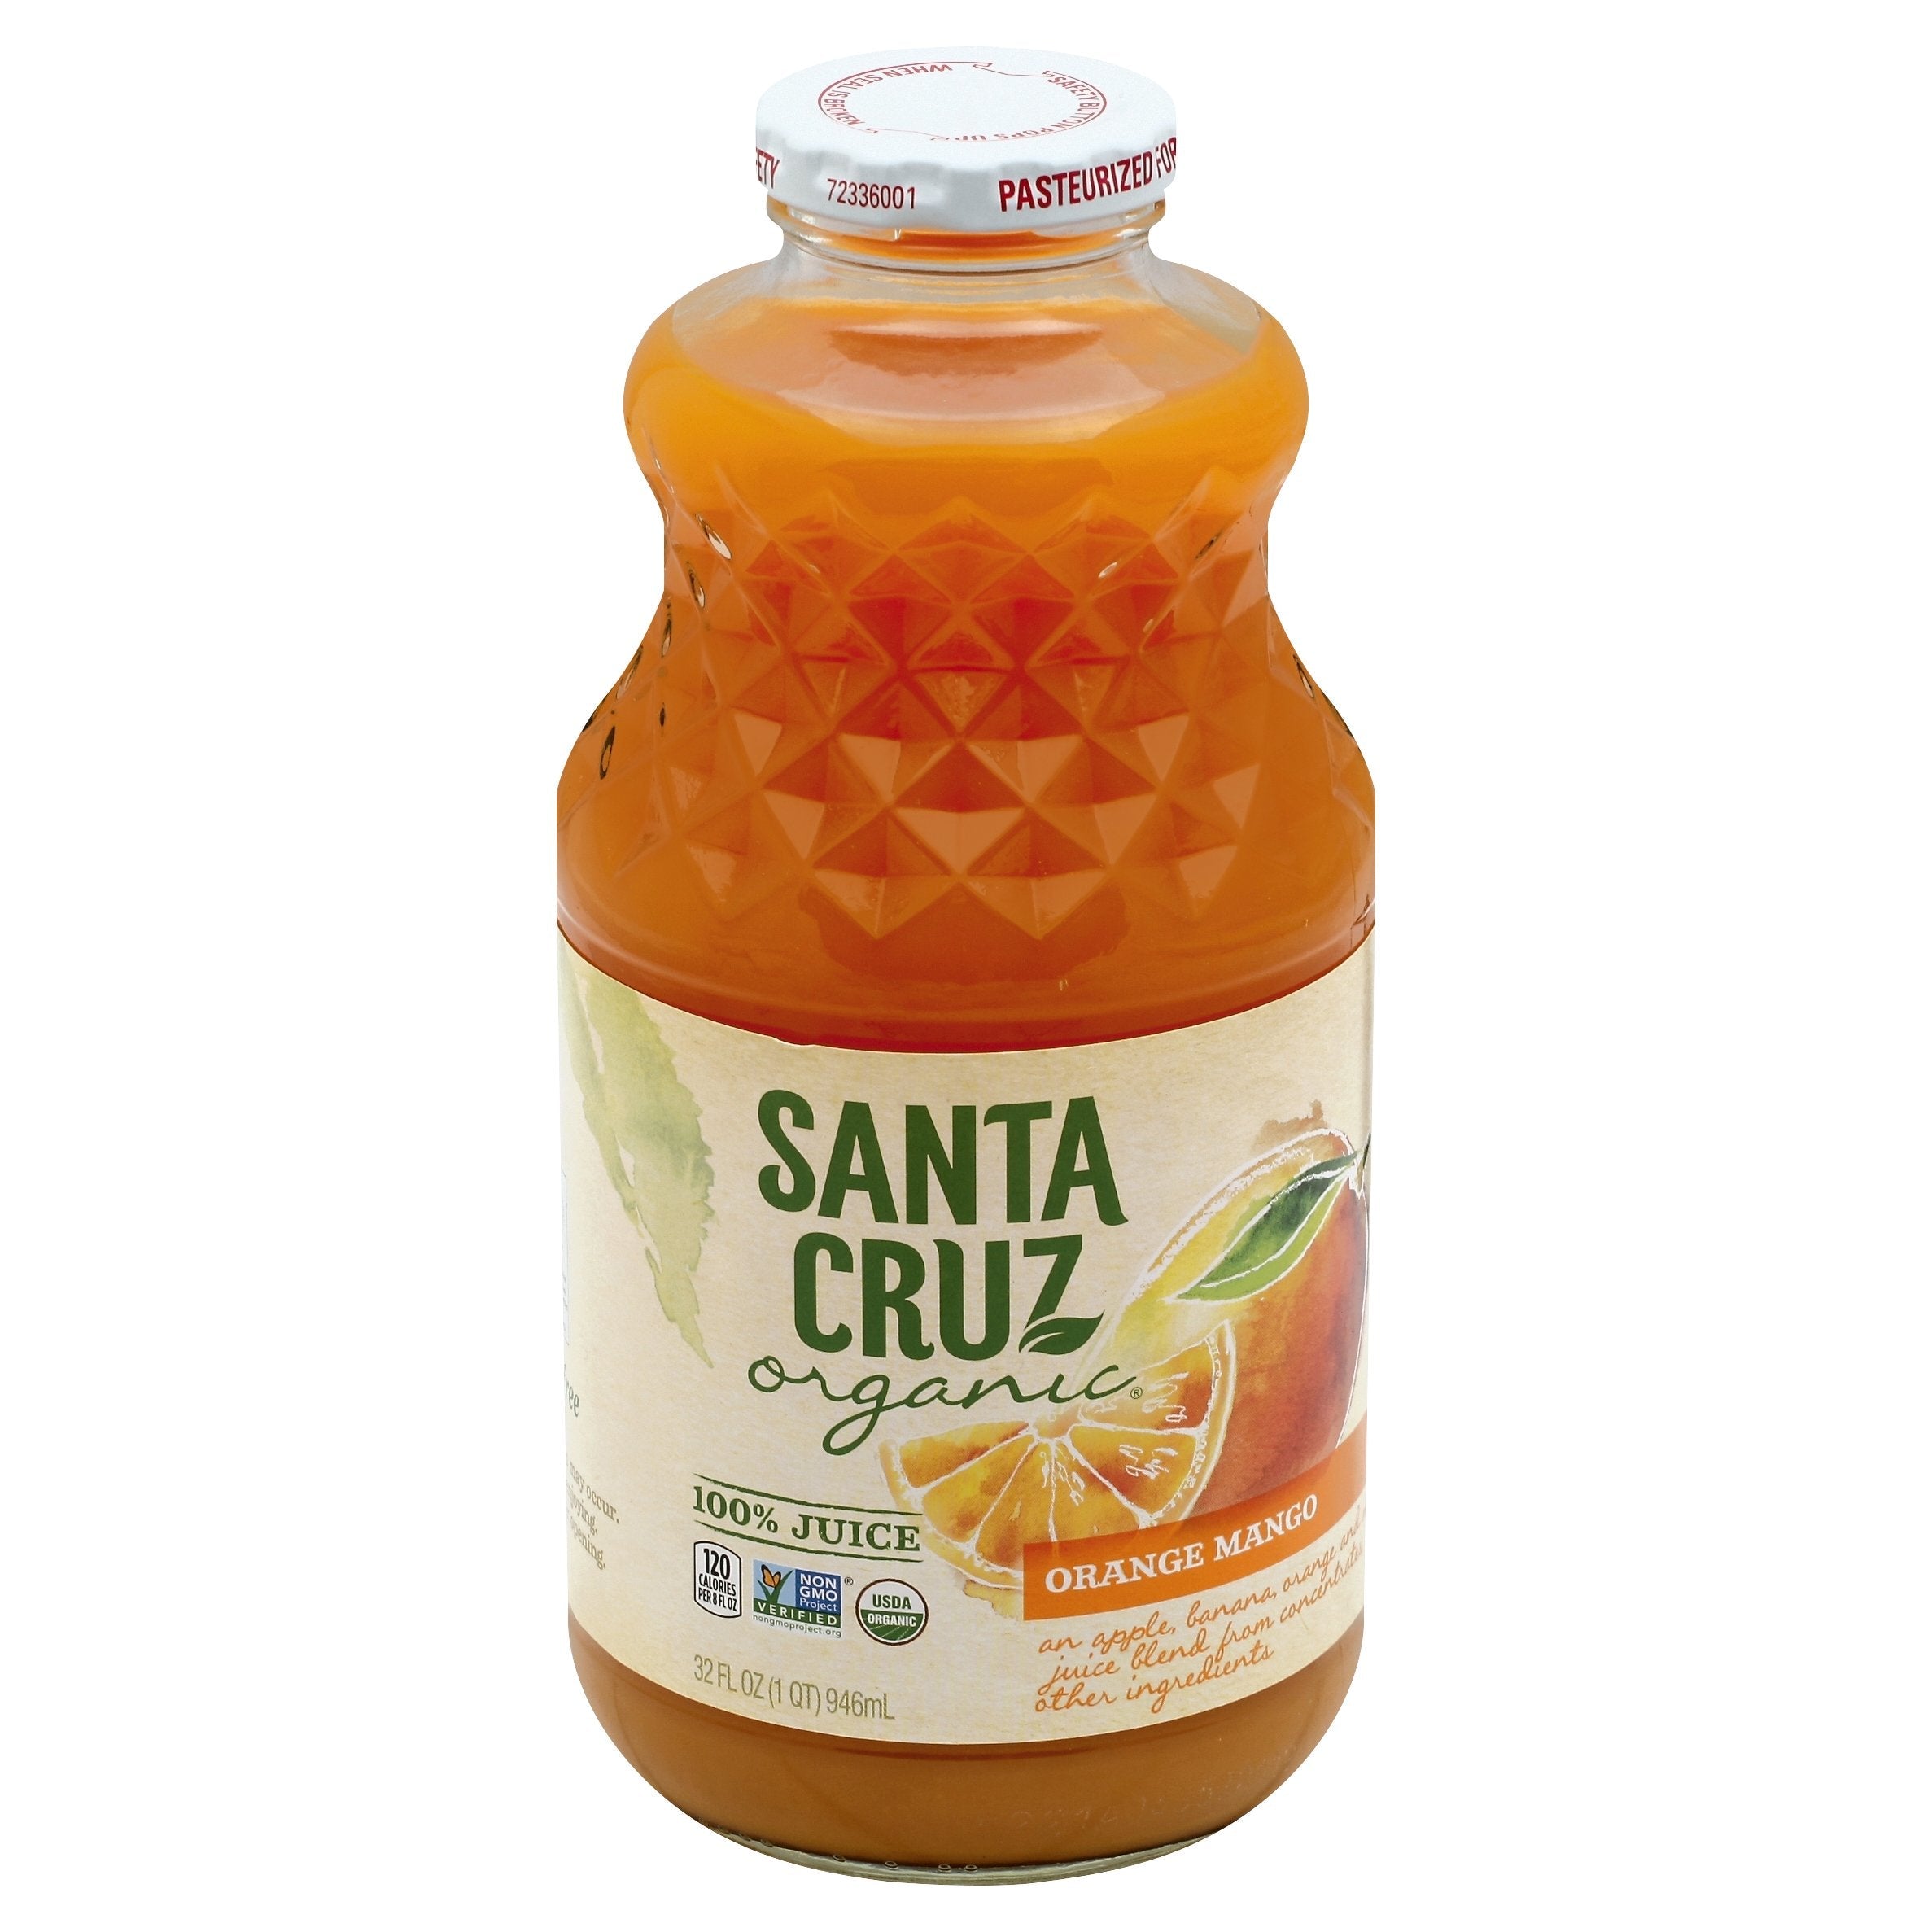 Hawaiian Punch Orange Ocean Juice Drink, 32 Oz.